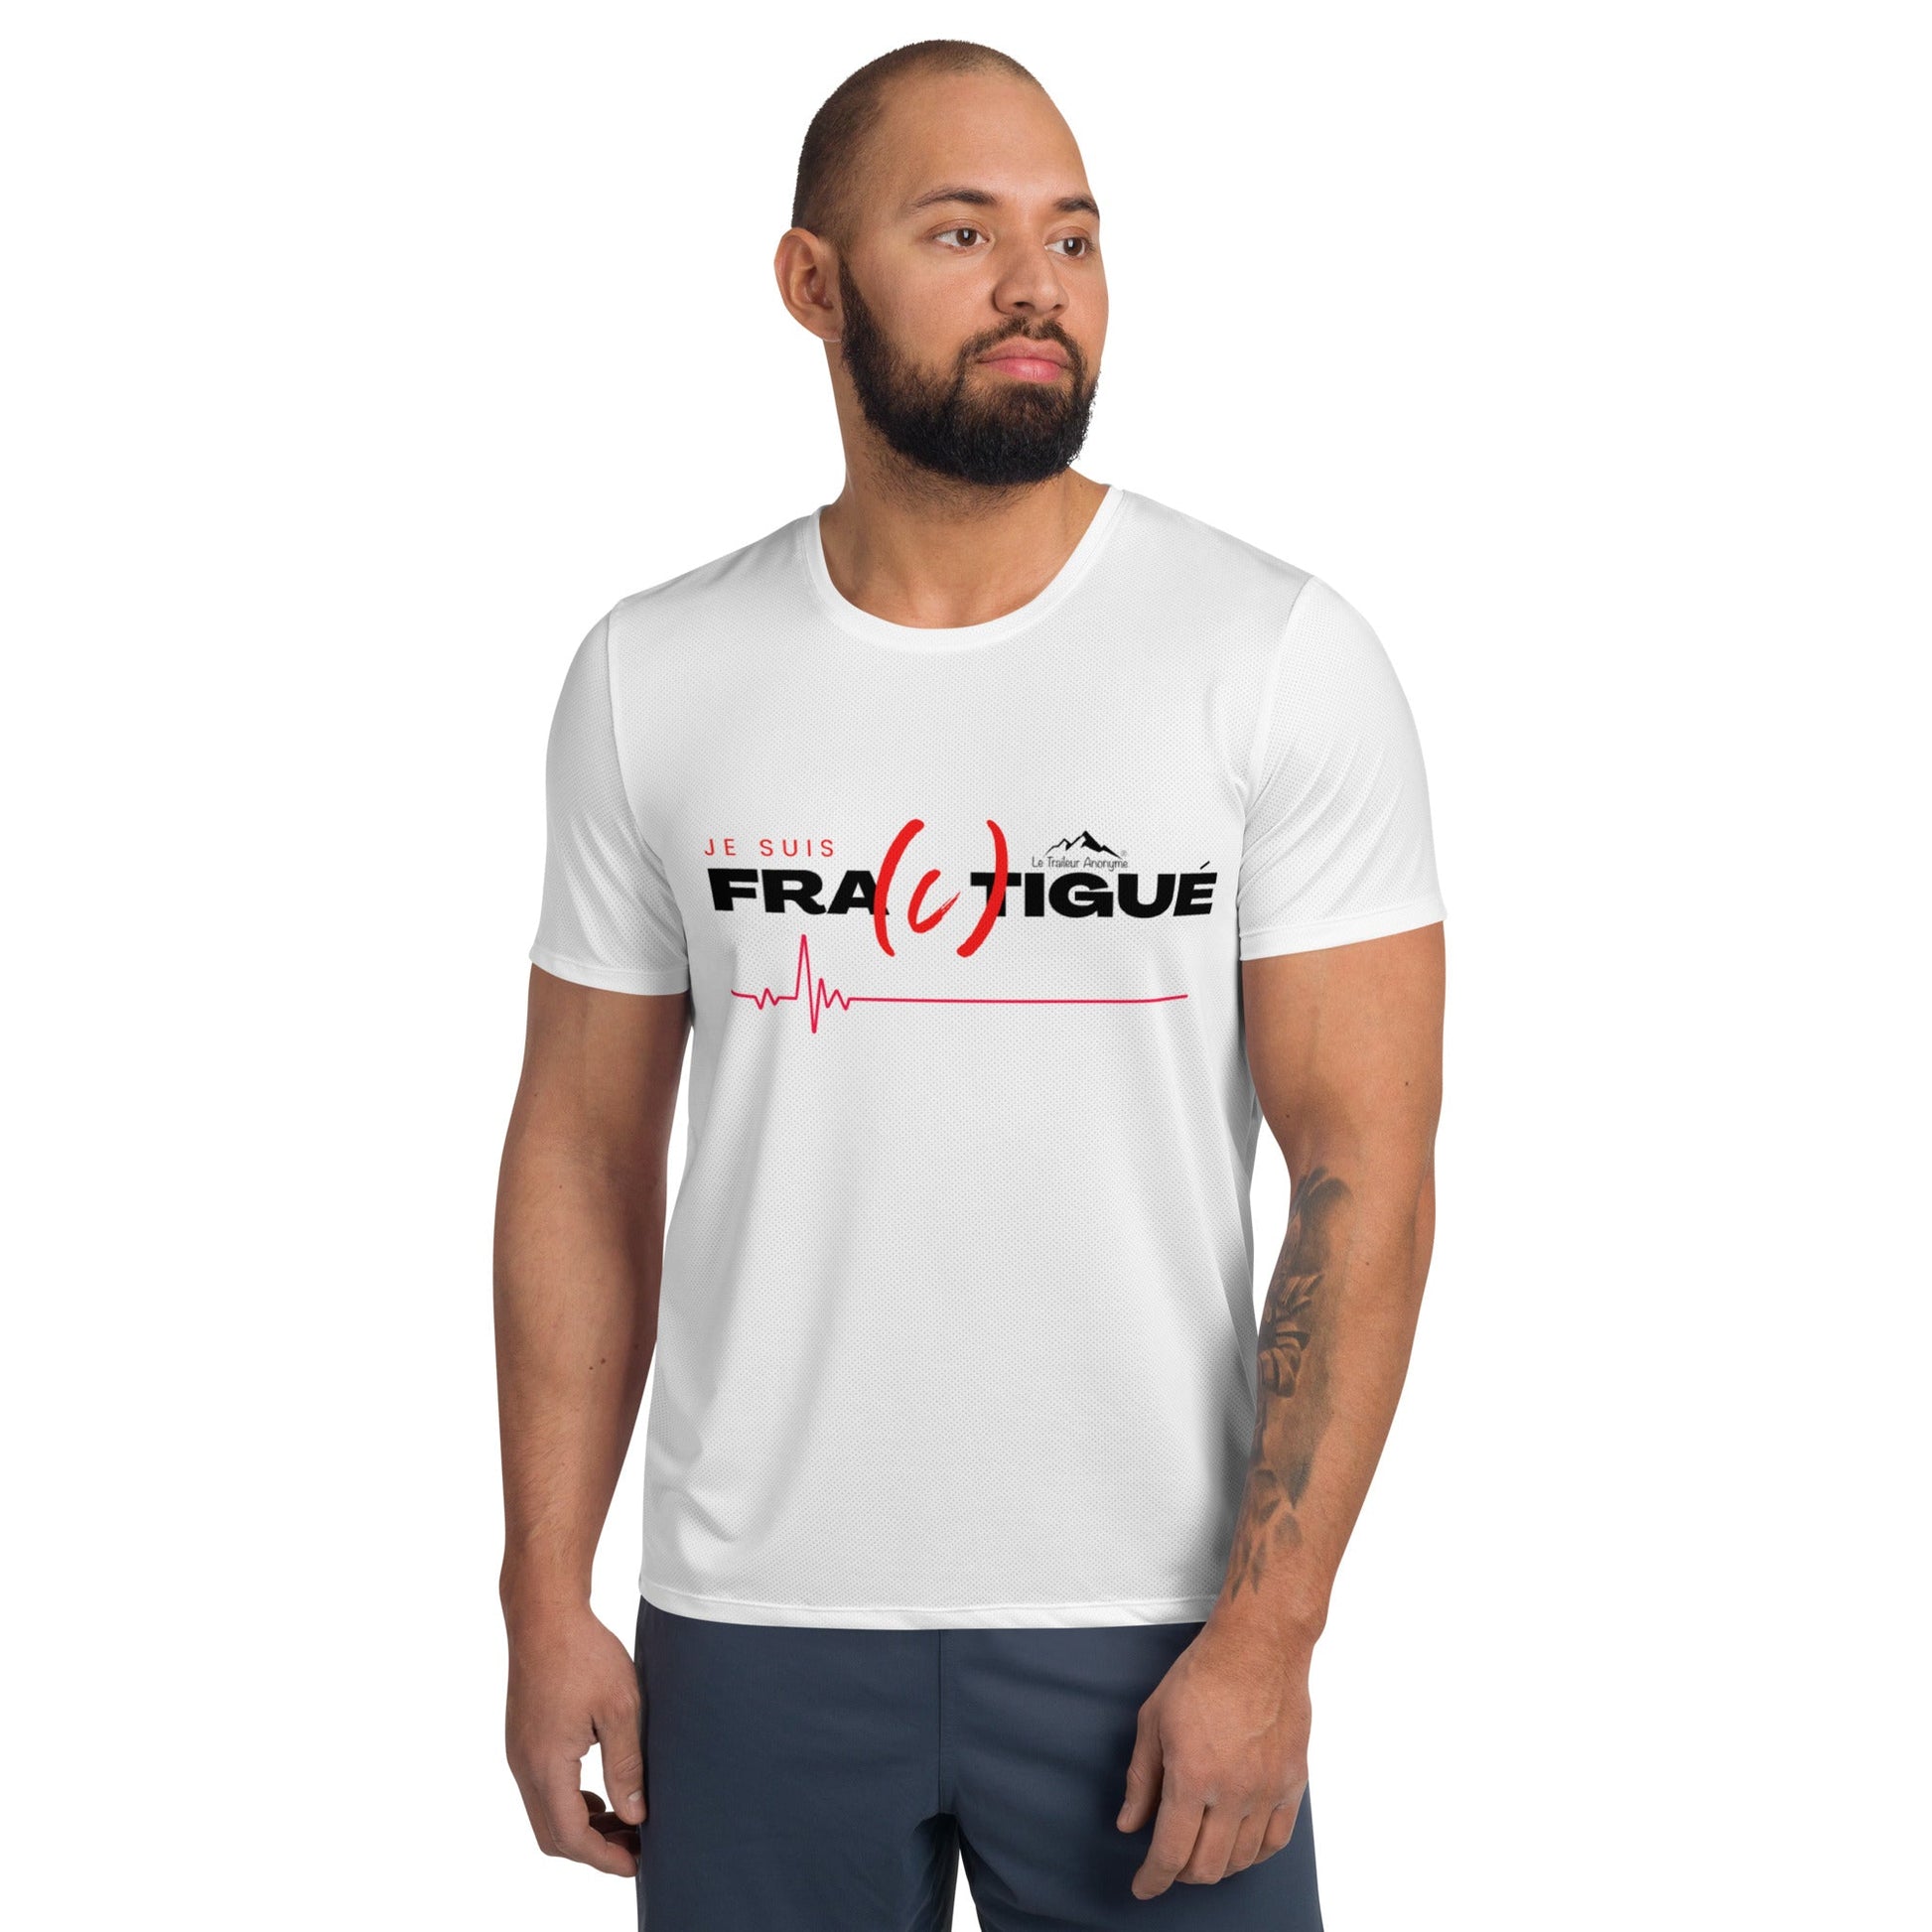 T-shirt Sport - Homme - Collection "Fra©tigué"(110) - Le Traileur Anonyme